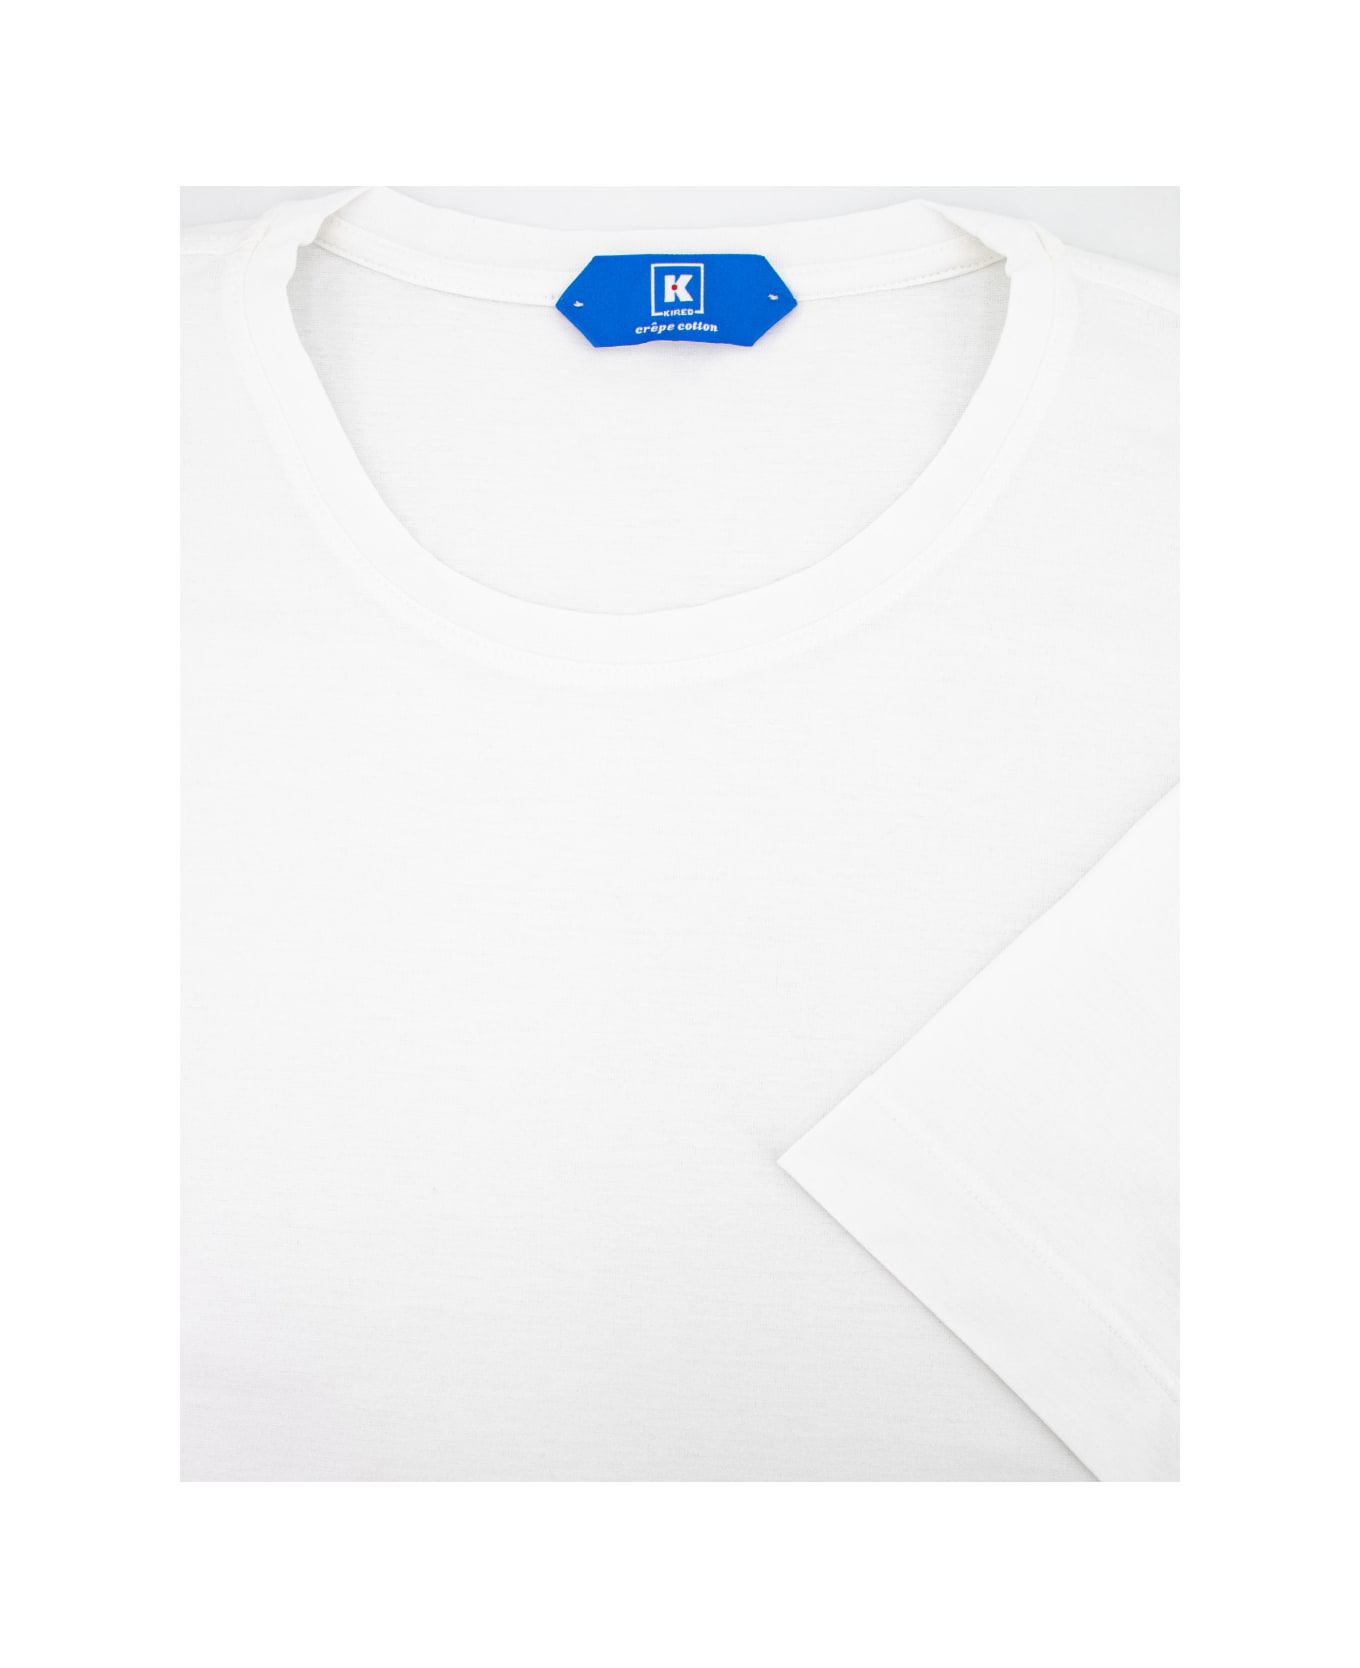 Kired T-shirt - WHITE シャツ